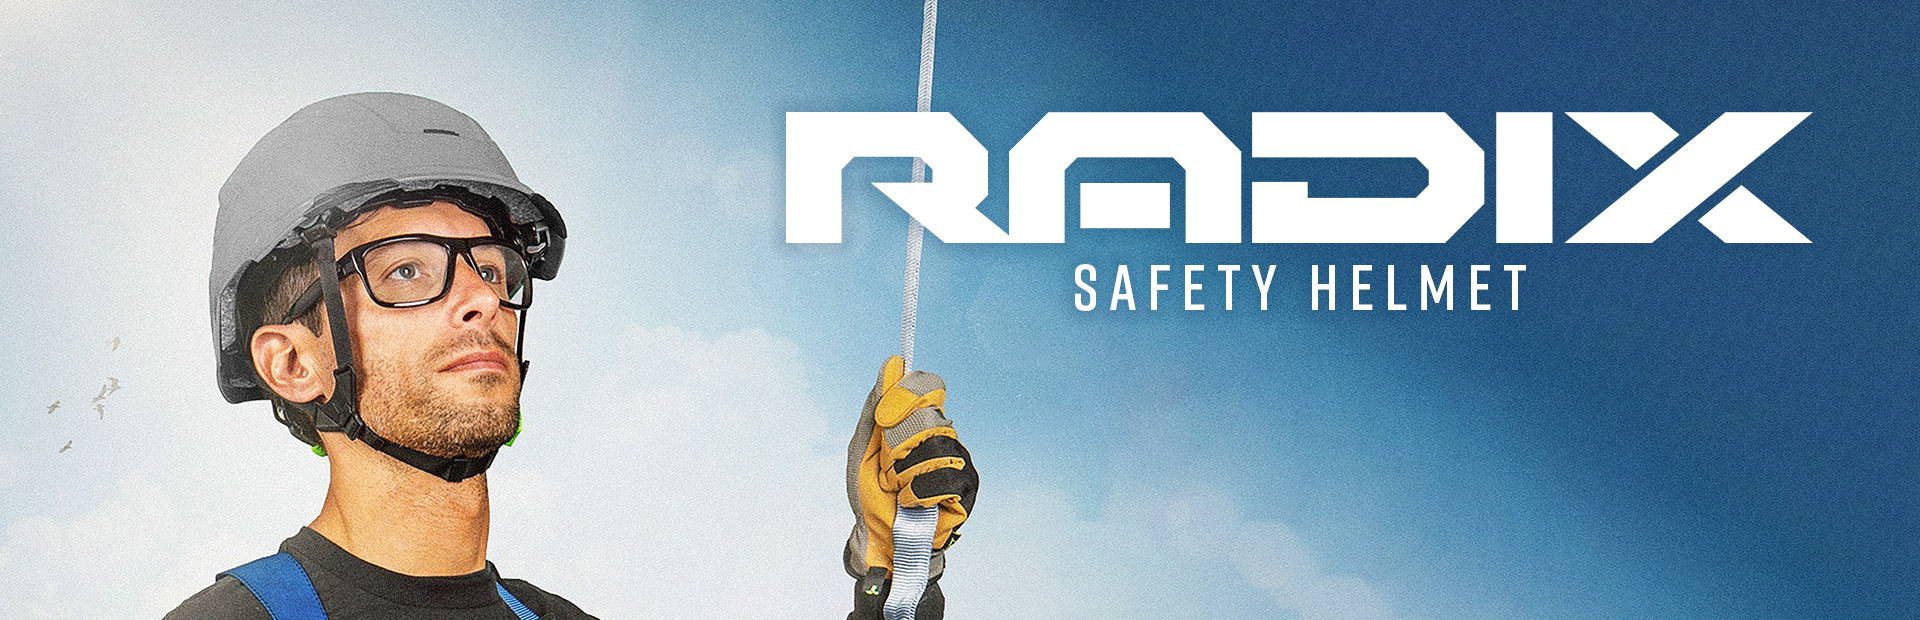 Radix Safety Helmet